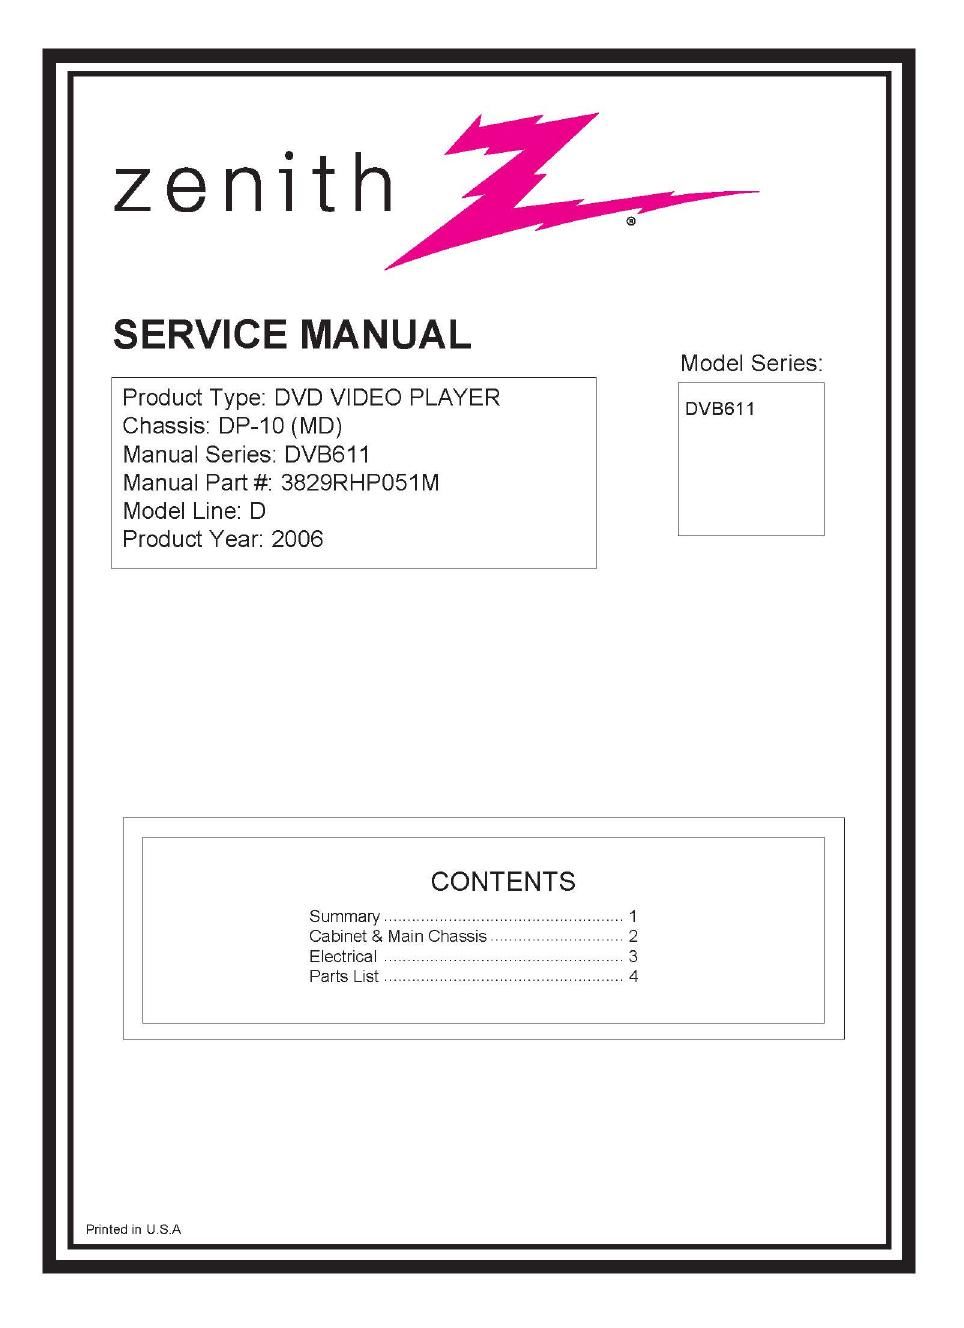 zenith dvb 611 service en